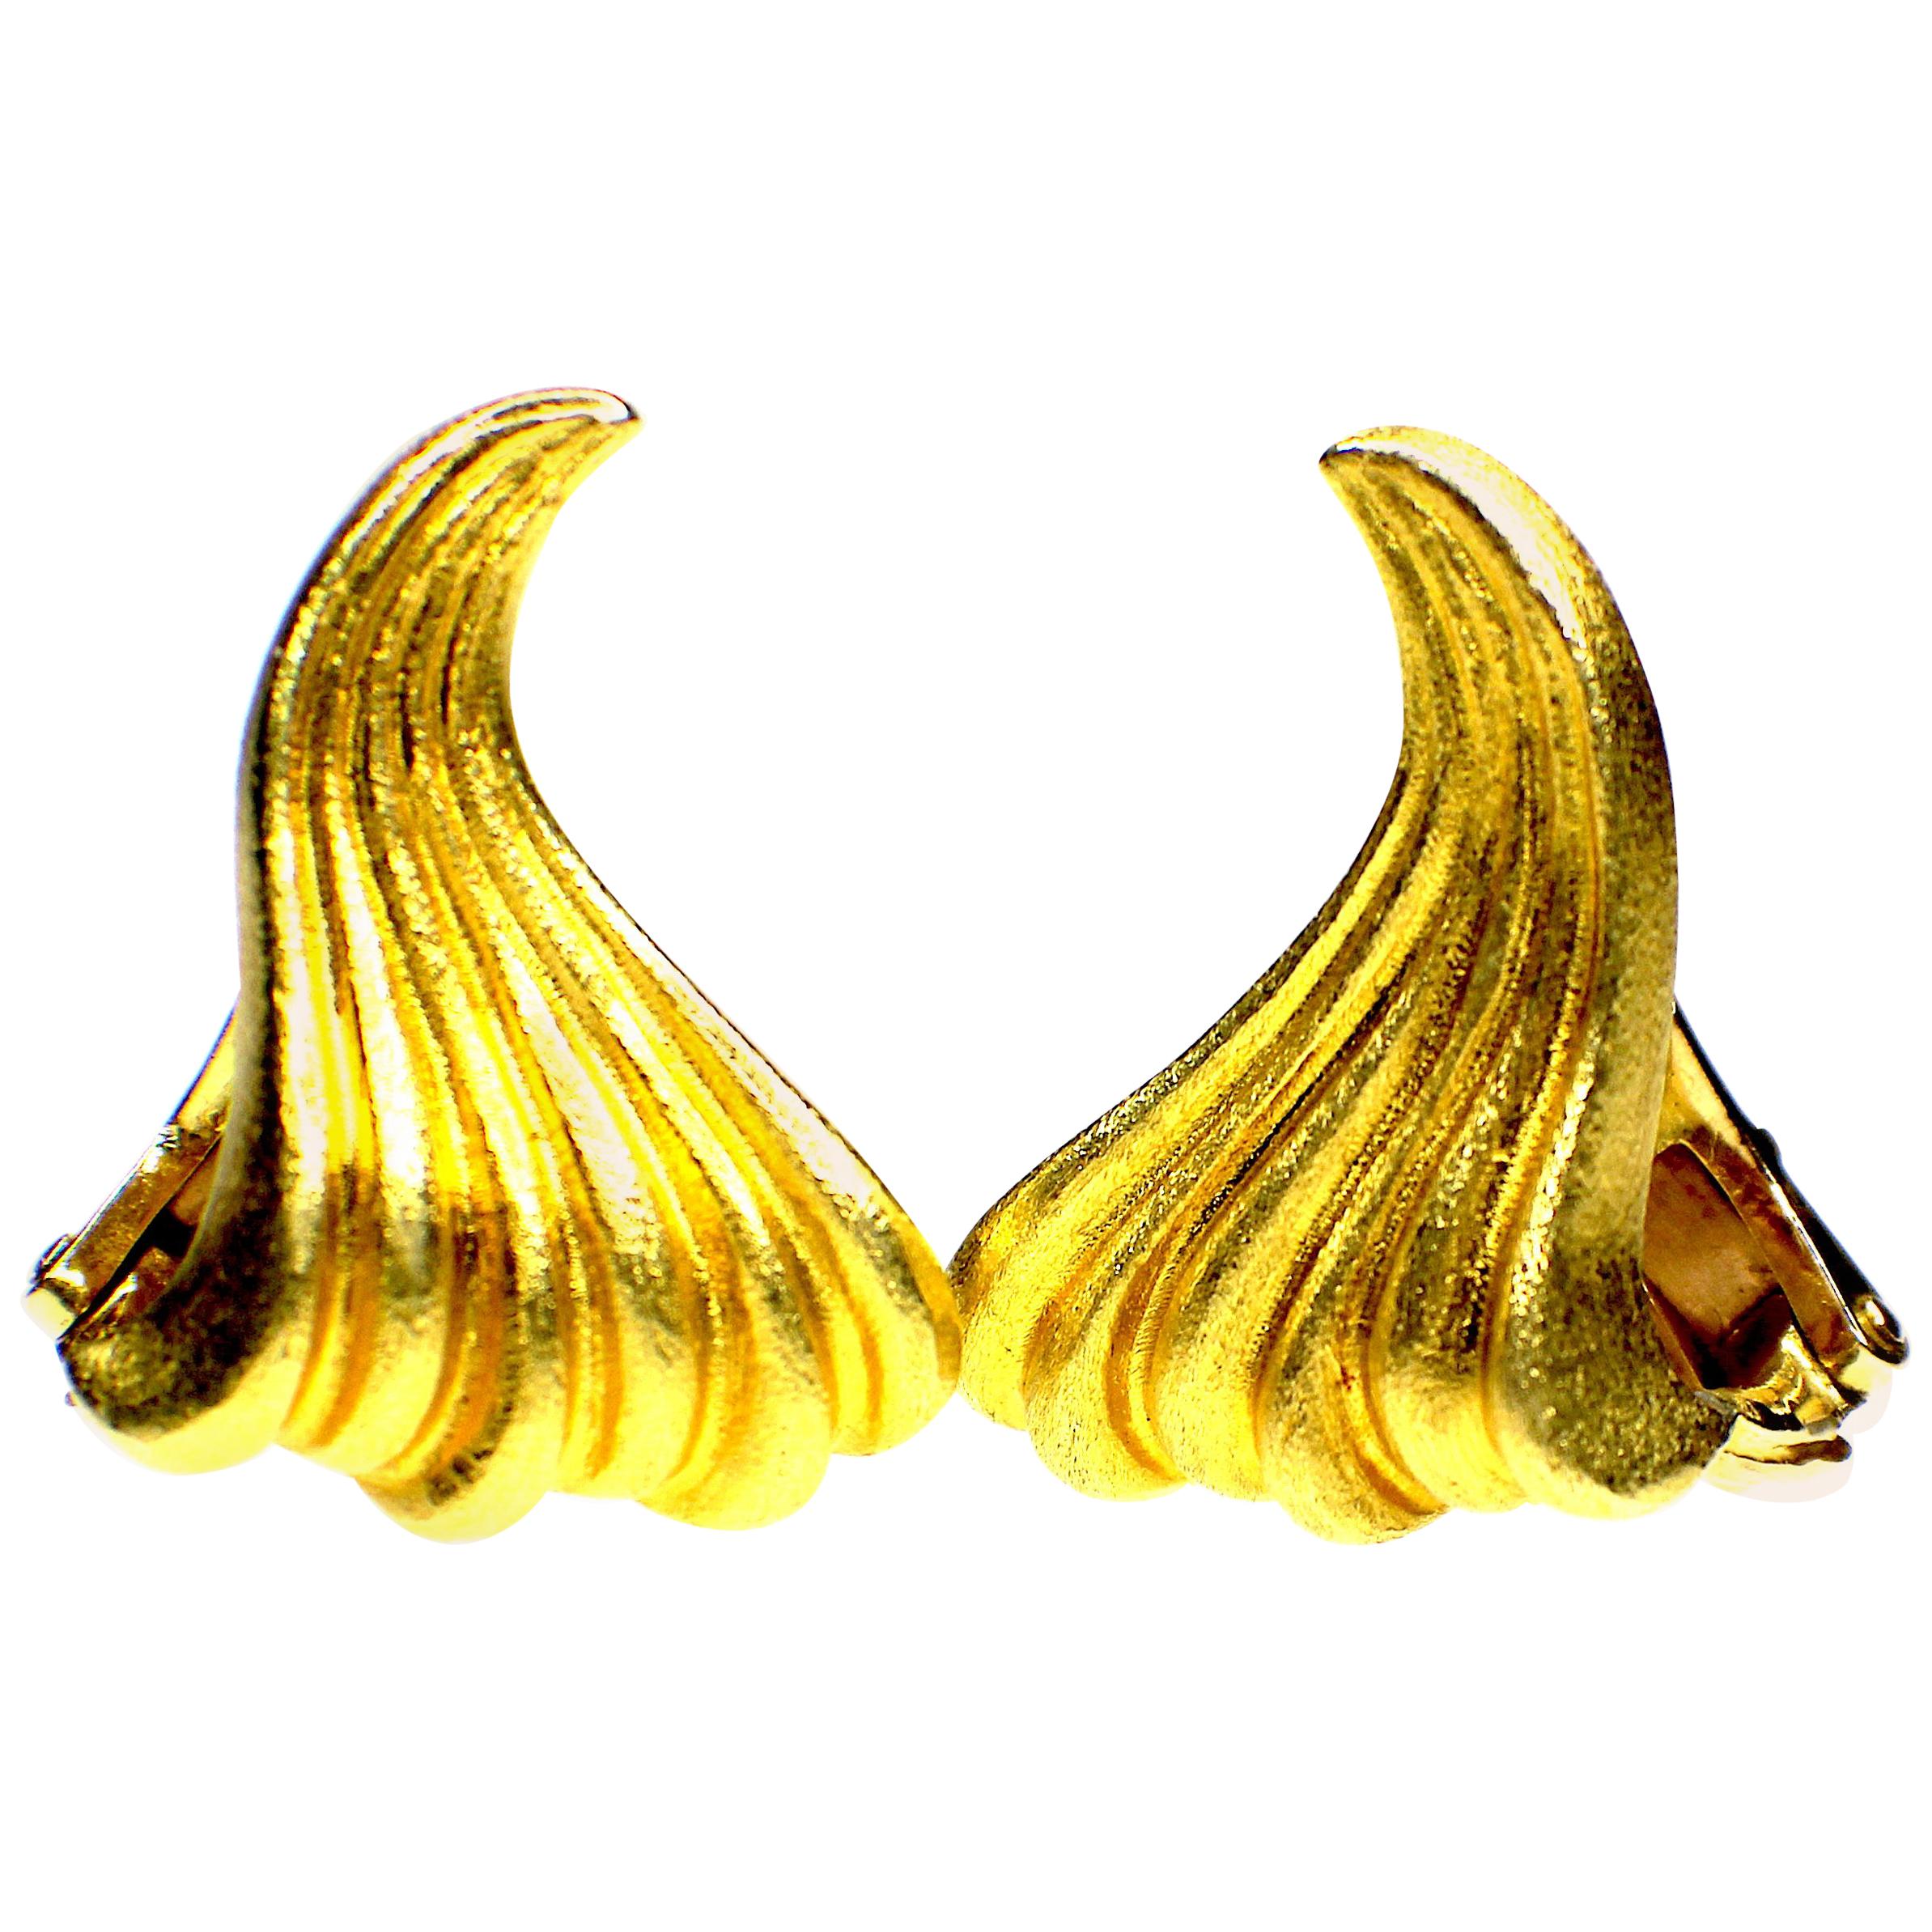 GEMOLITHOS Maramenos & Pateras "Waves" Pair of Earclips, 18 Karat Gold 1980s For Sale